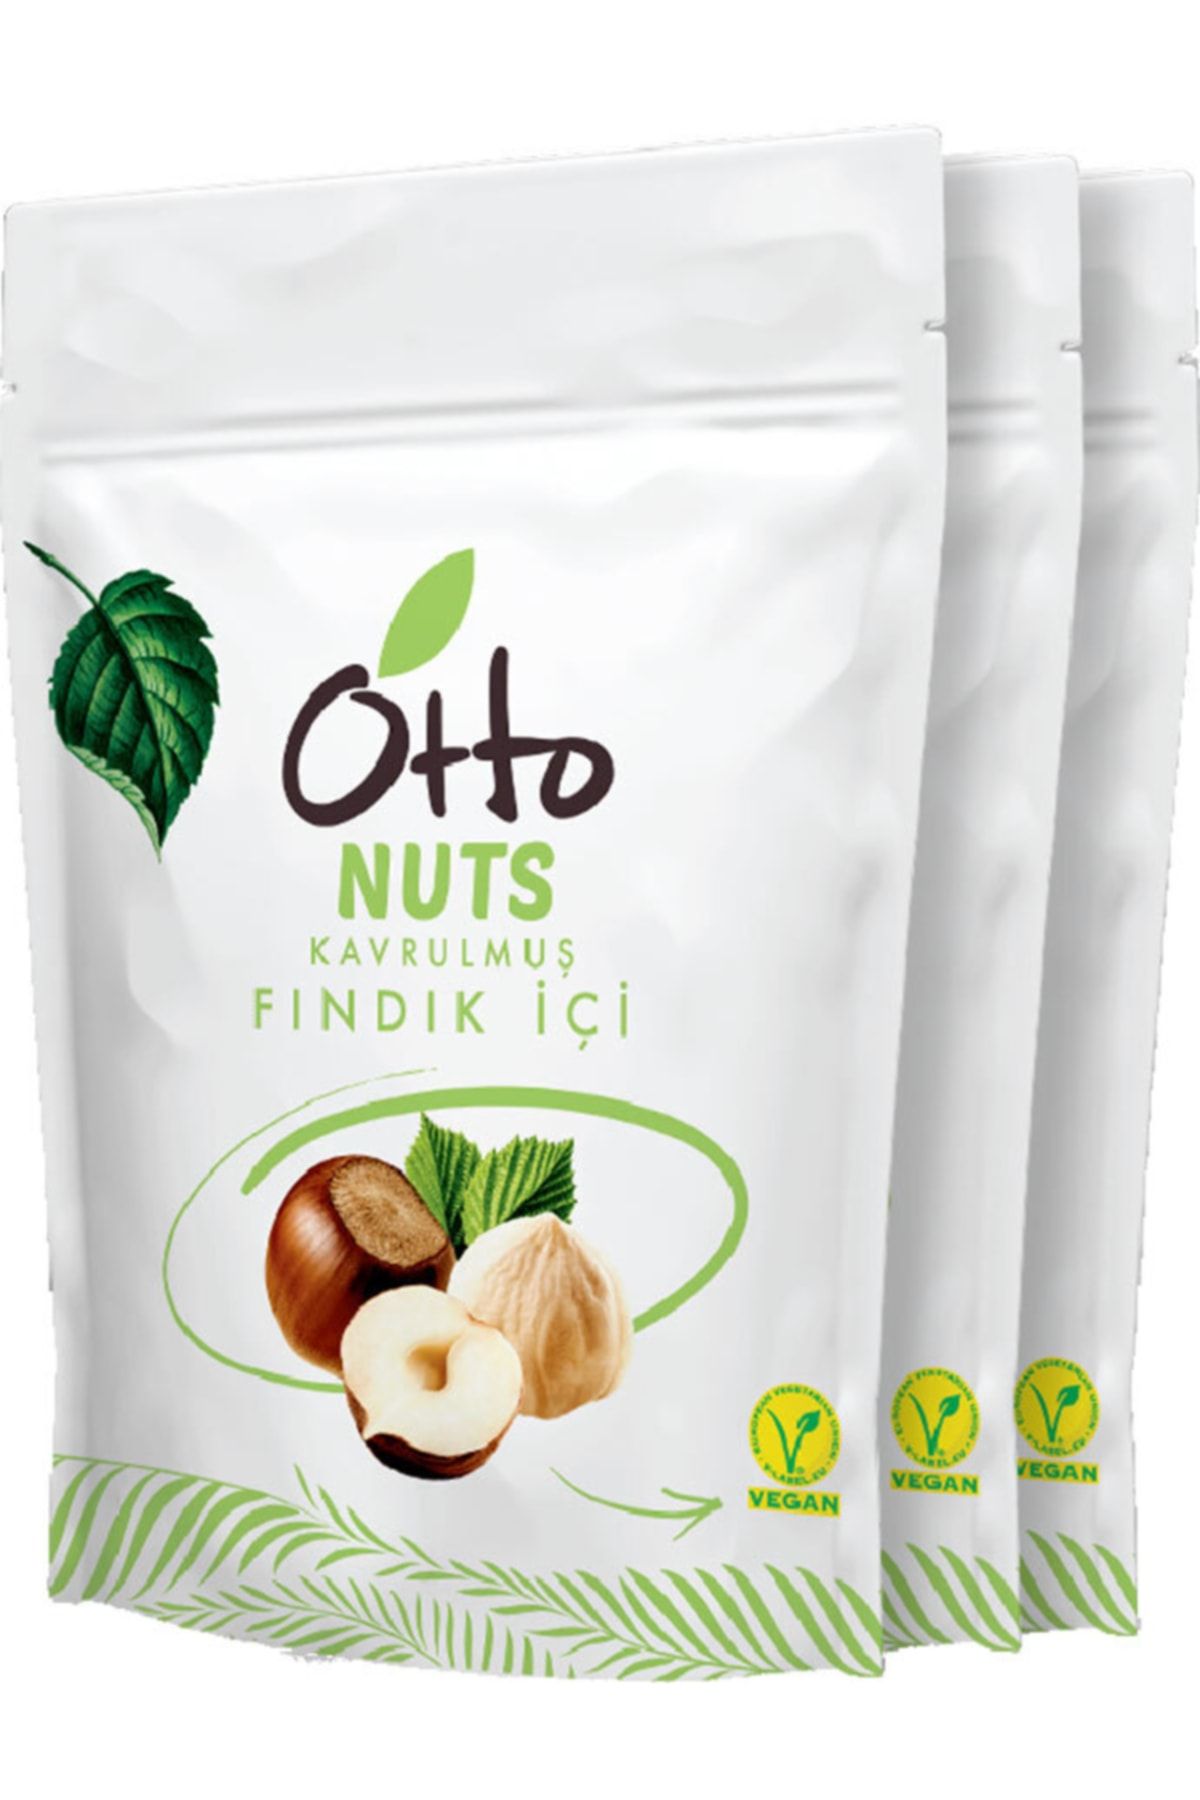 Otto Nuts Vegan Kavrulmuş Fındık Içi 3 X 150 gr